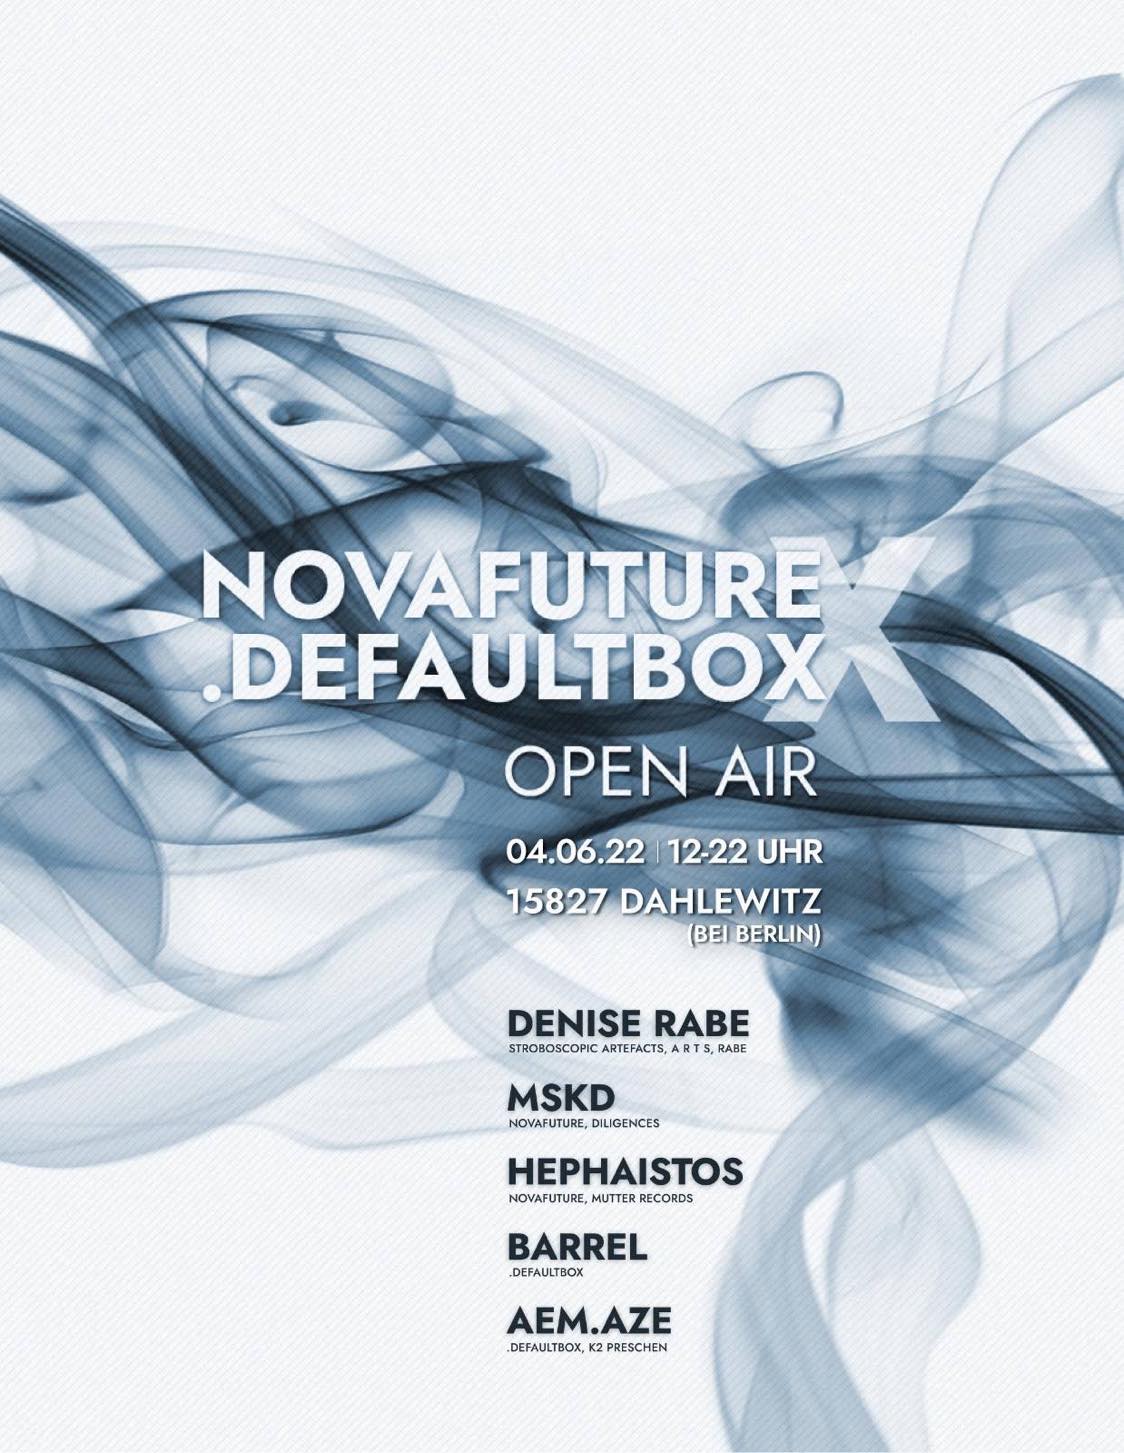 NovaFuture x .defaultbox Open Air 2022 with Denise Rabe, aem.aze, Barrel, Hephaistos and MSKD